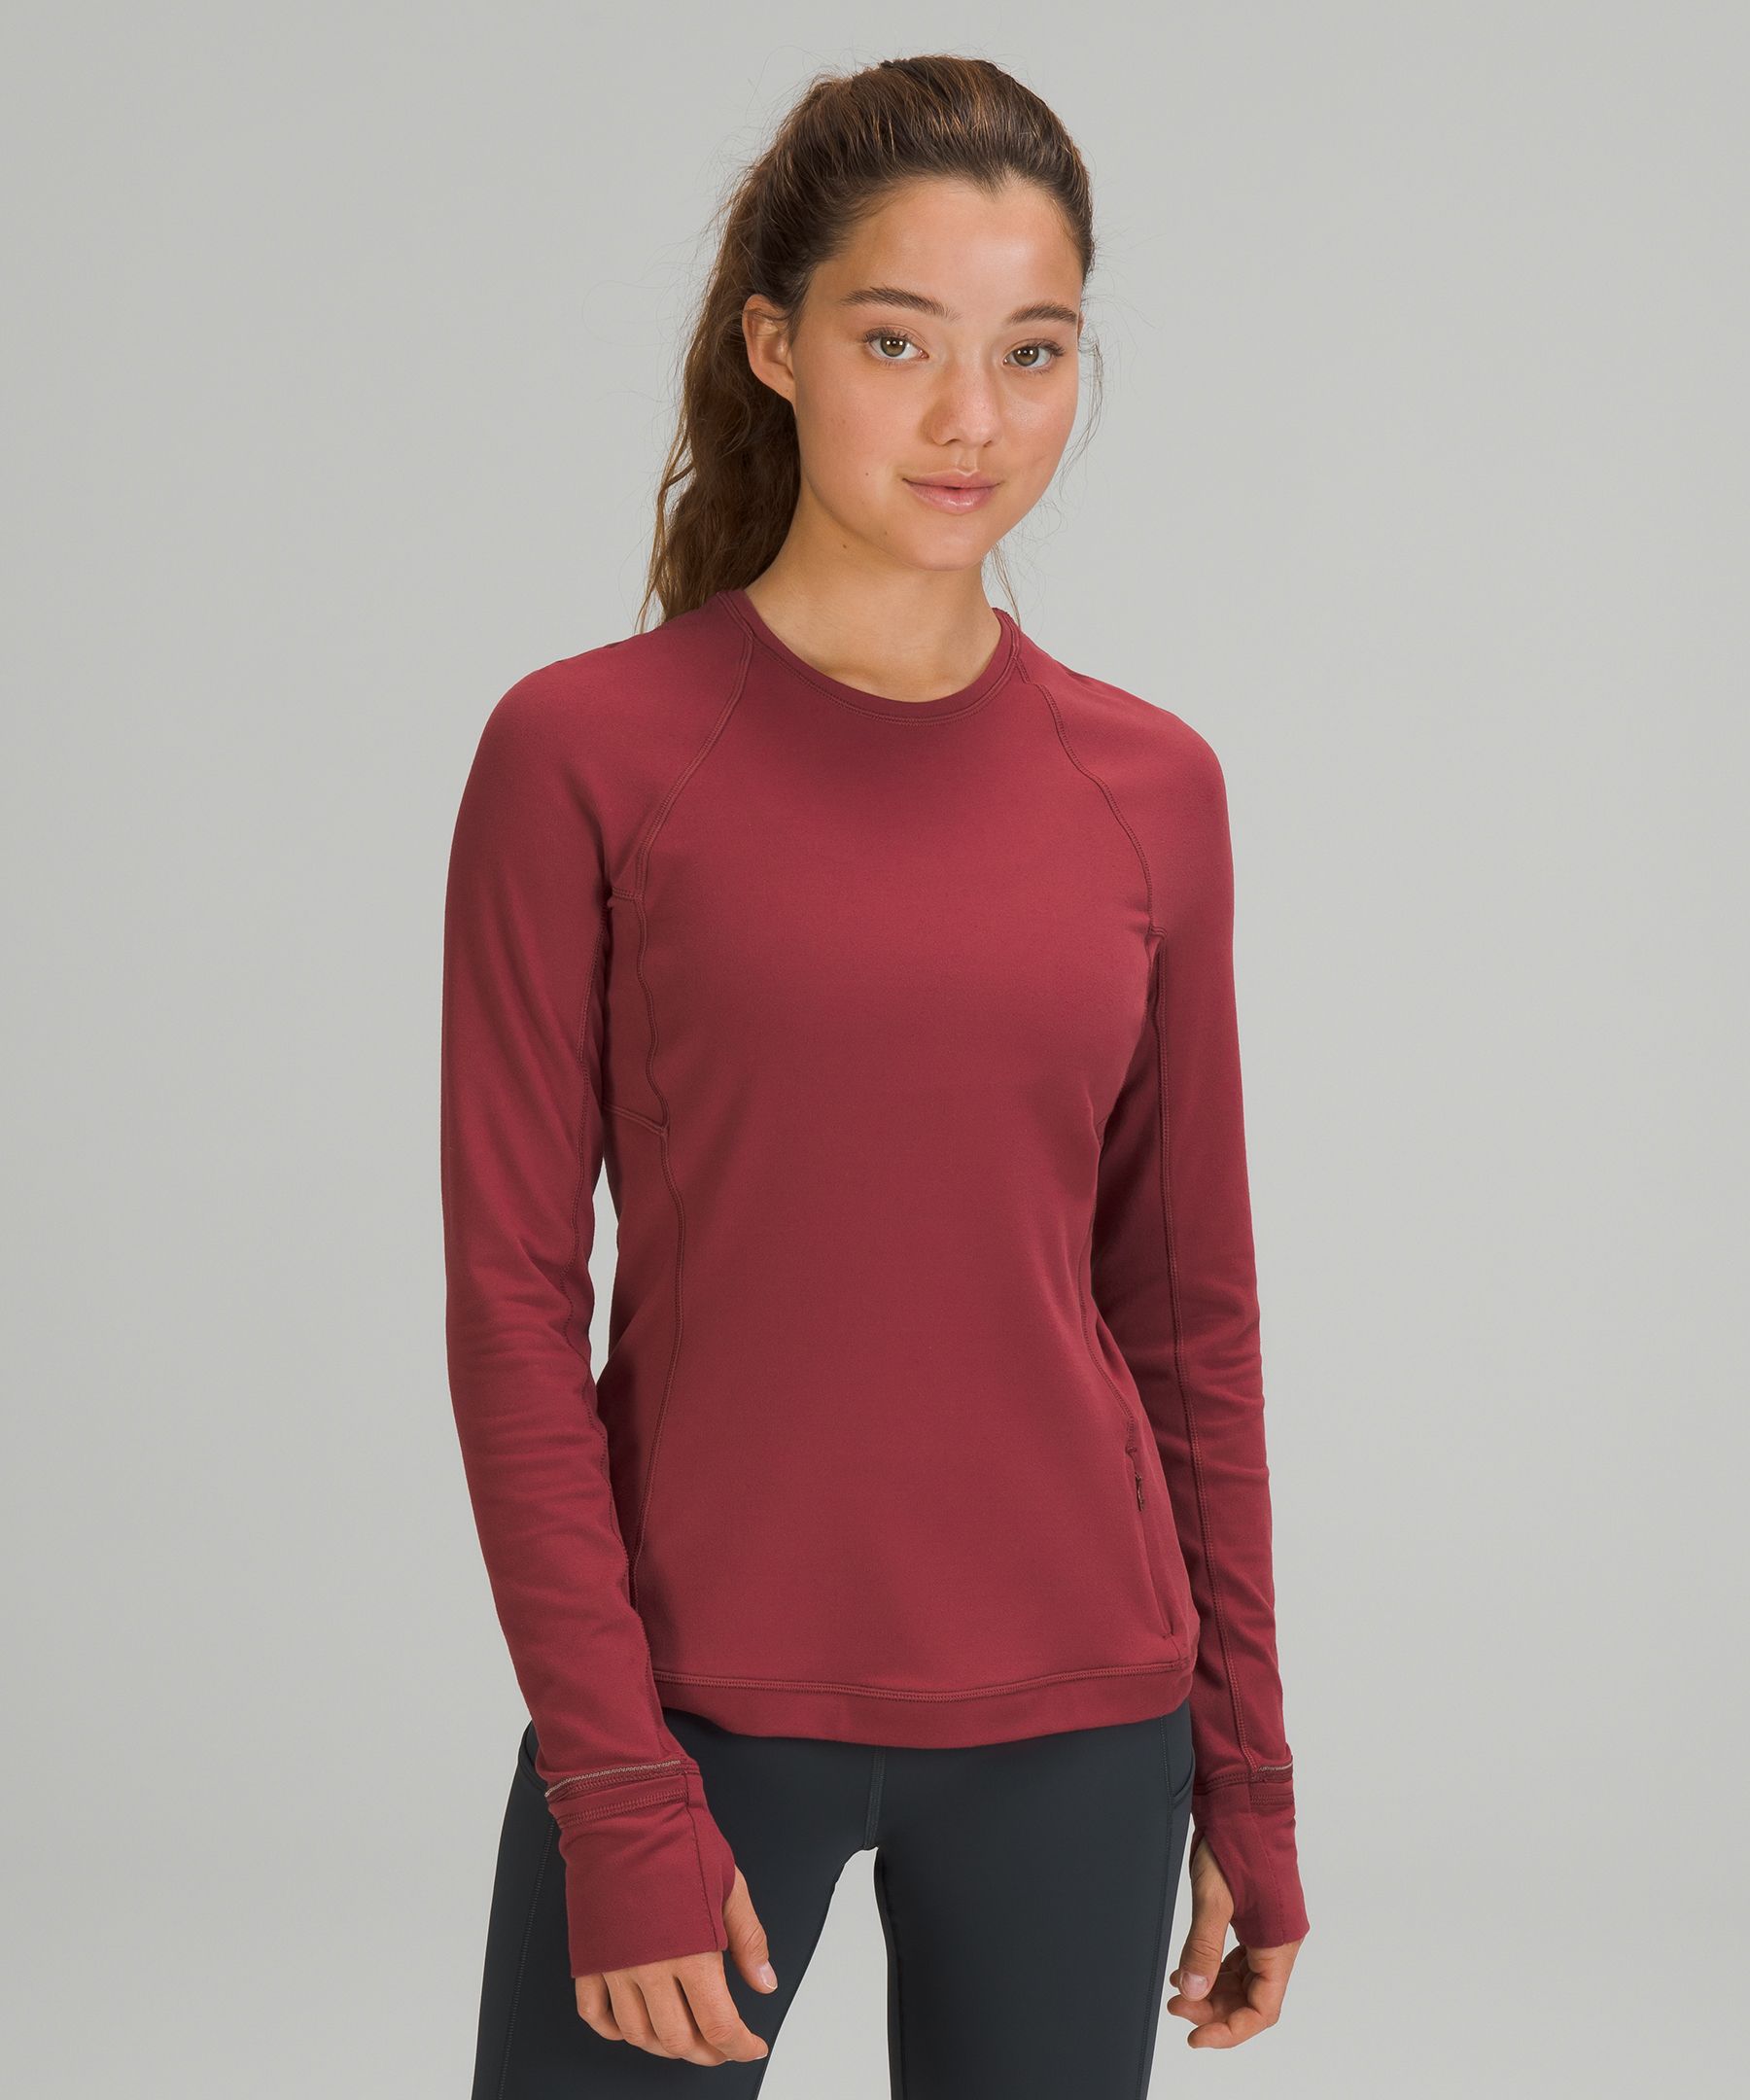 Women's Red Long Sleeve Shirts | lululemon